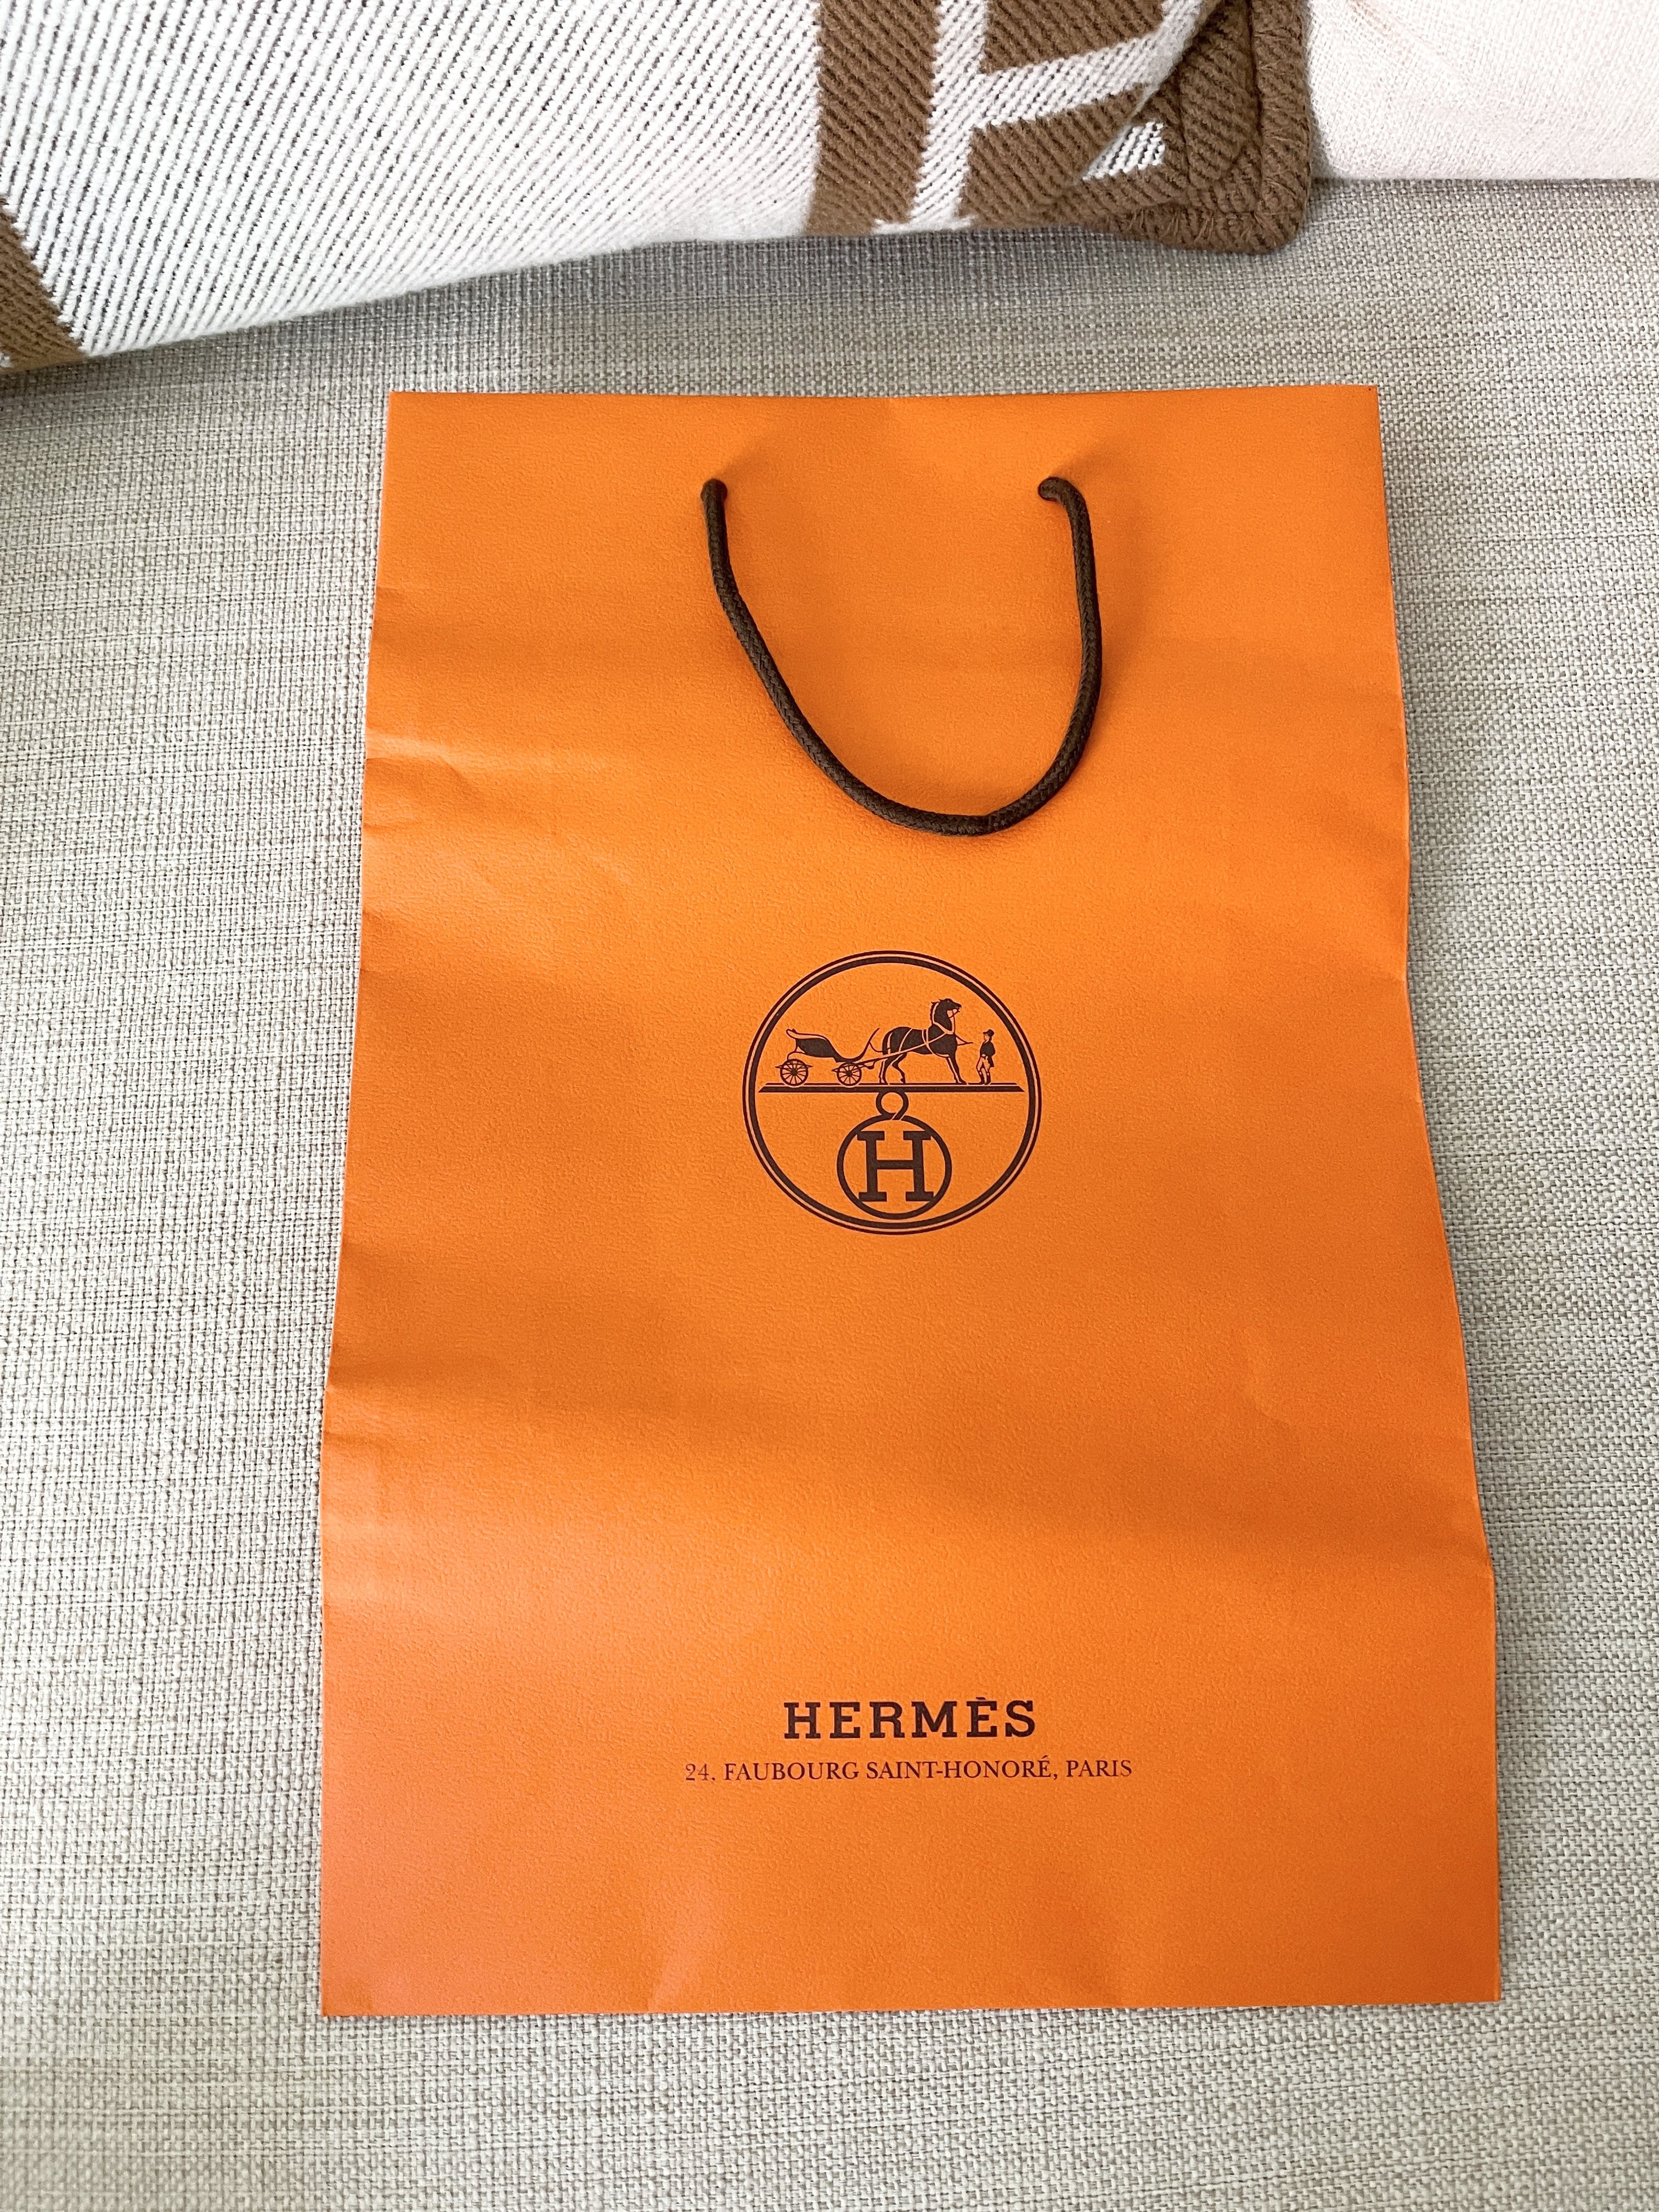 *FINAL* Hermes Hermès Medium Shopping Gift Paper Bag - 4